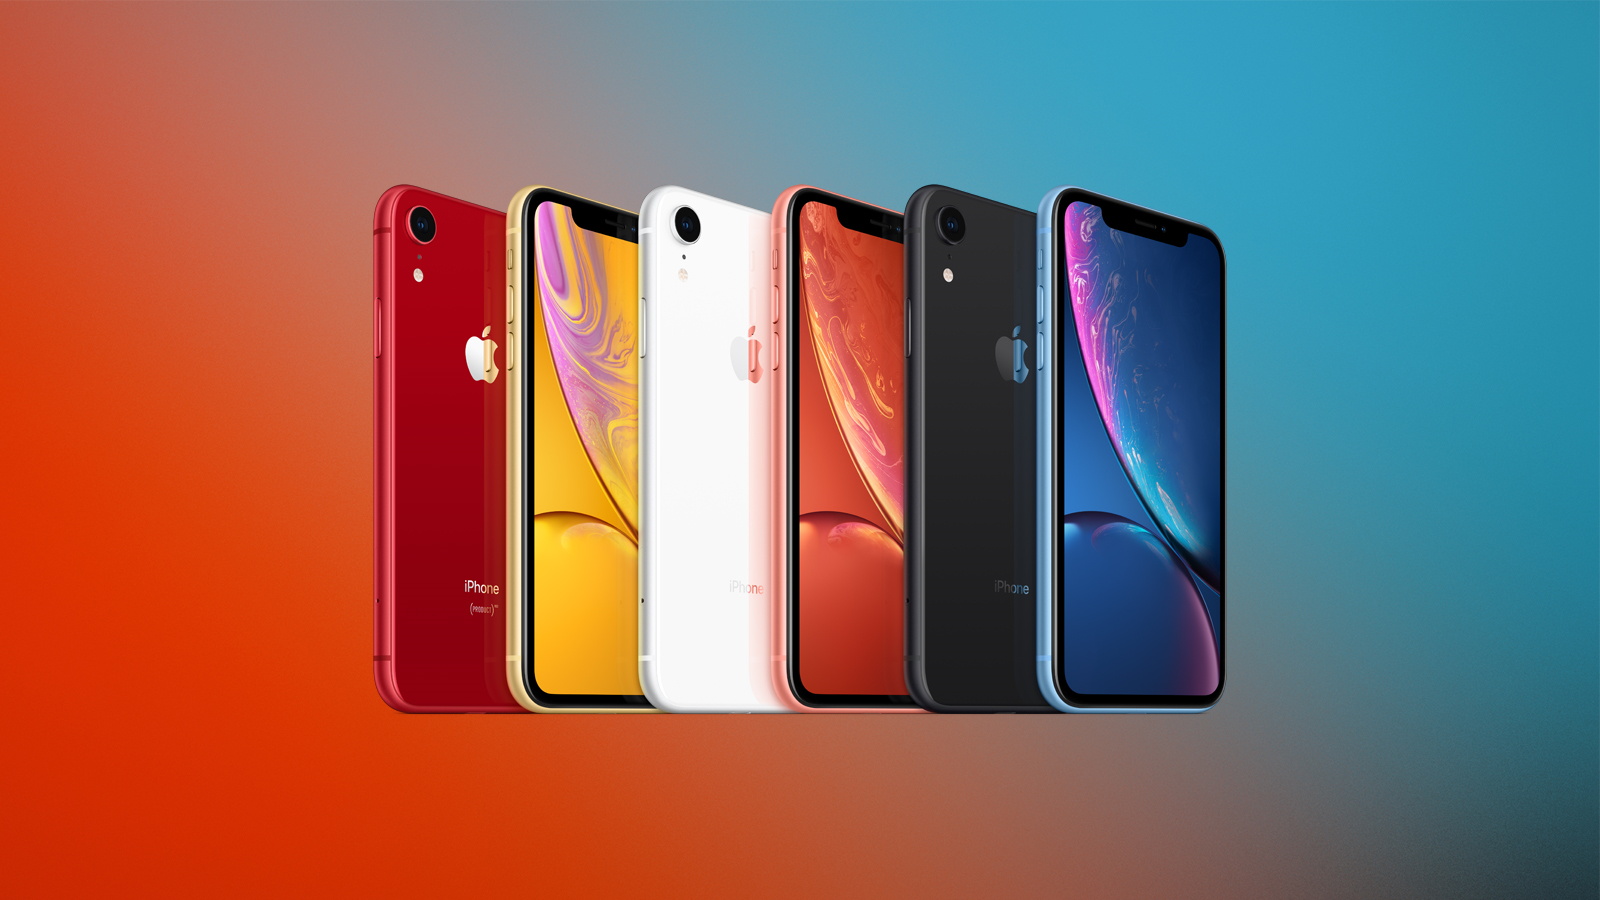 Black Friday iPhone Deals 2019 - Over 25+ Unmissable Deals Live Now!